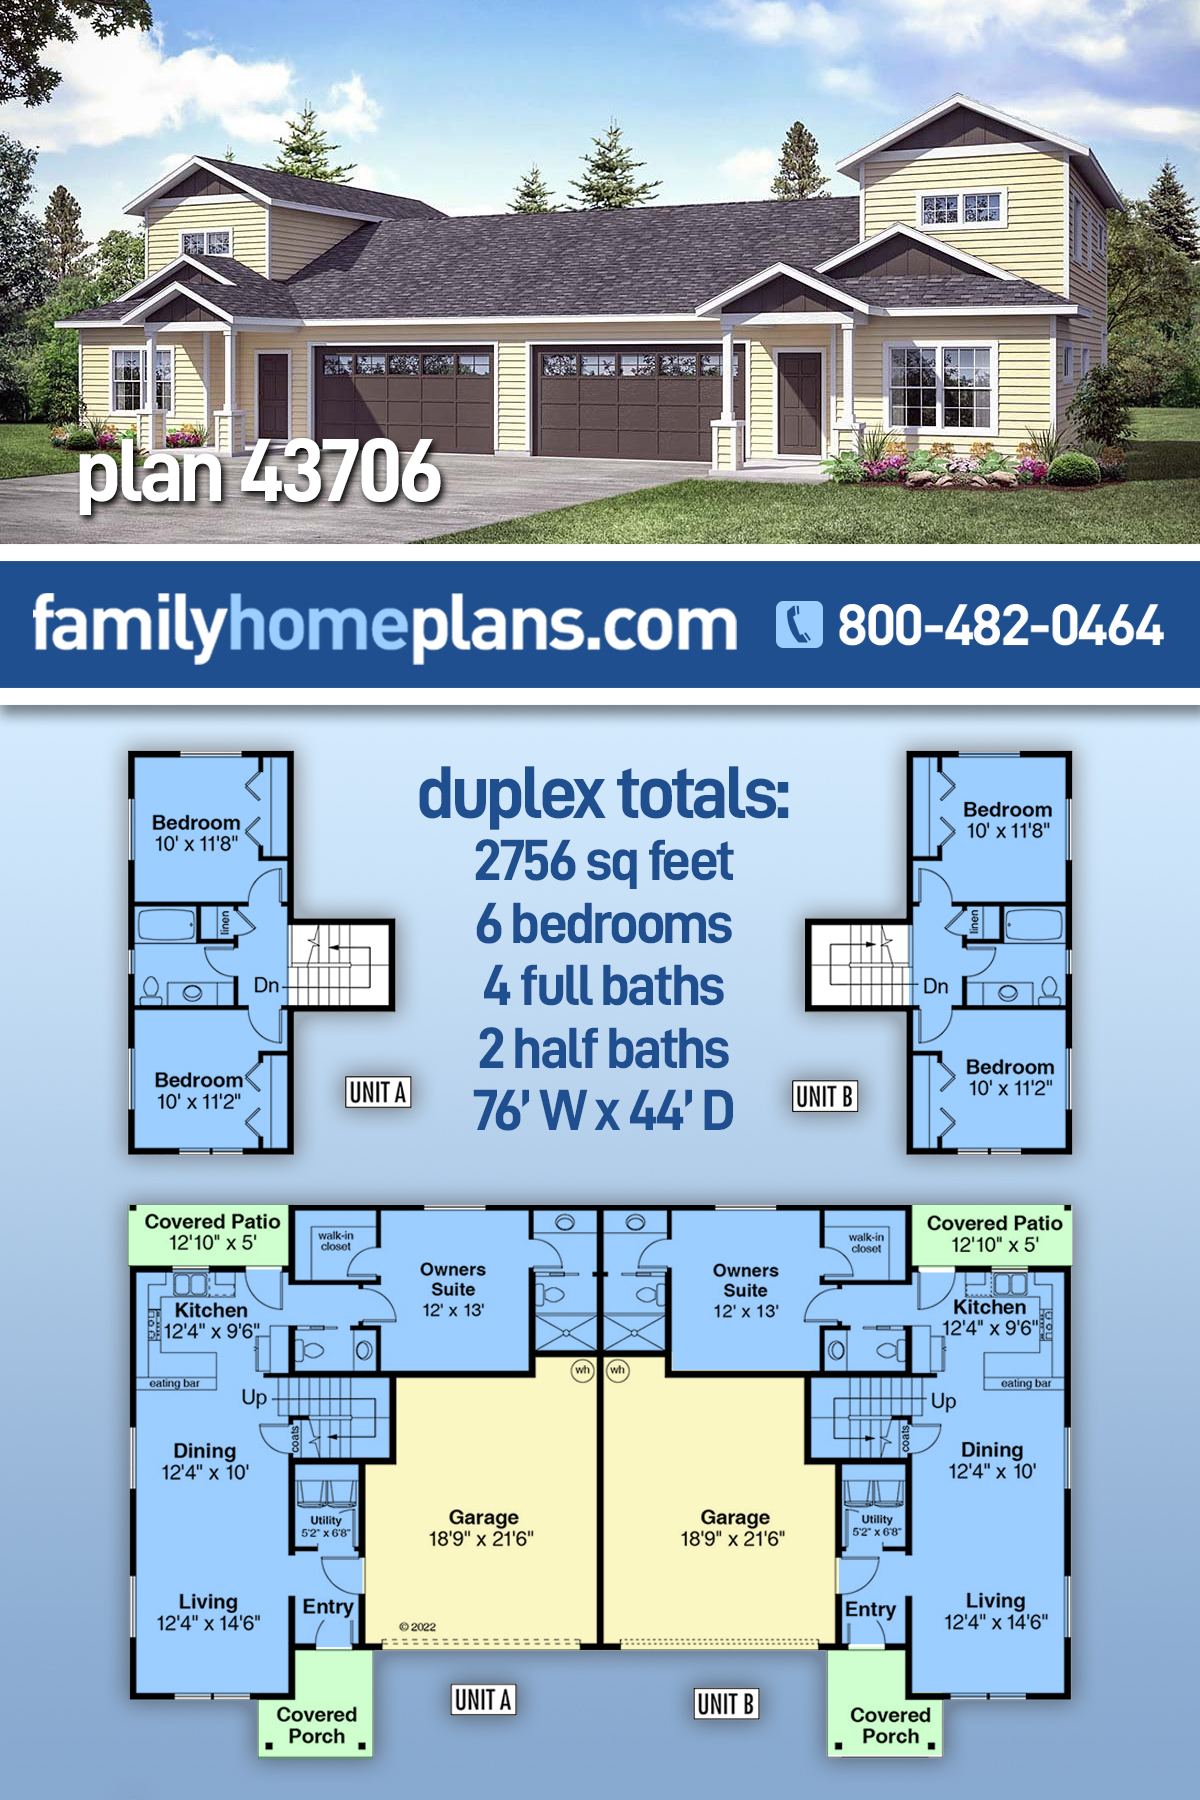 Multi-Family Plan 43706